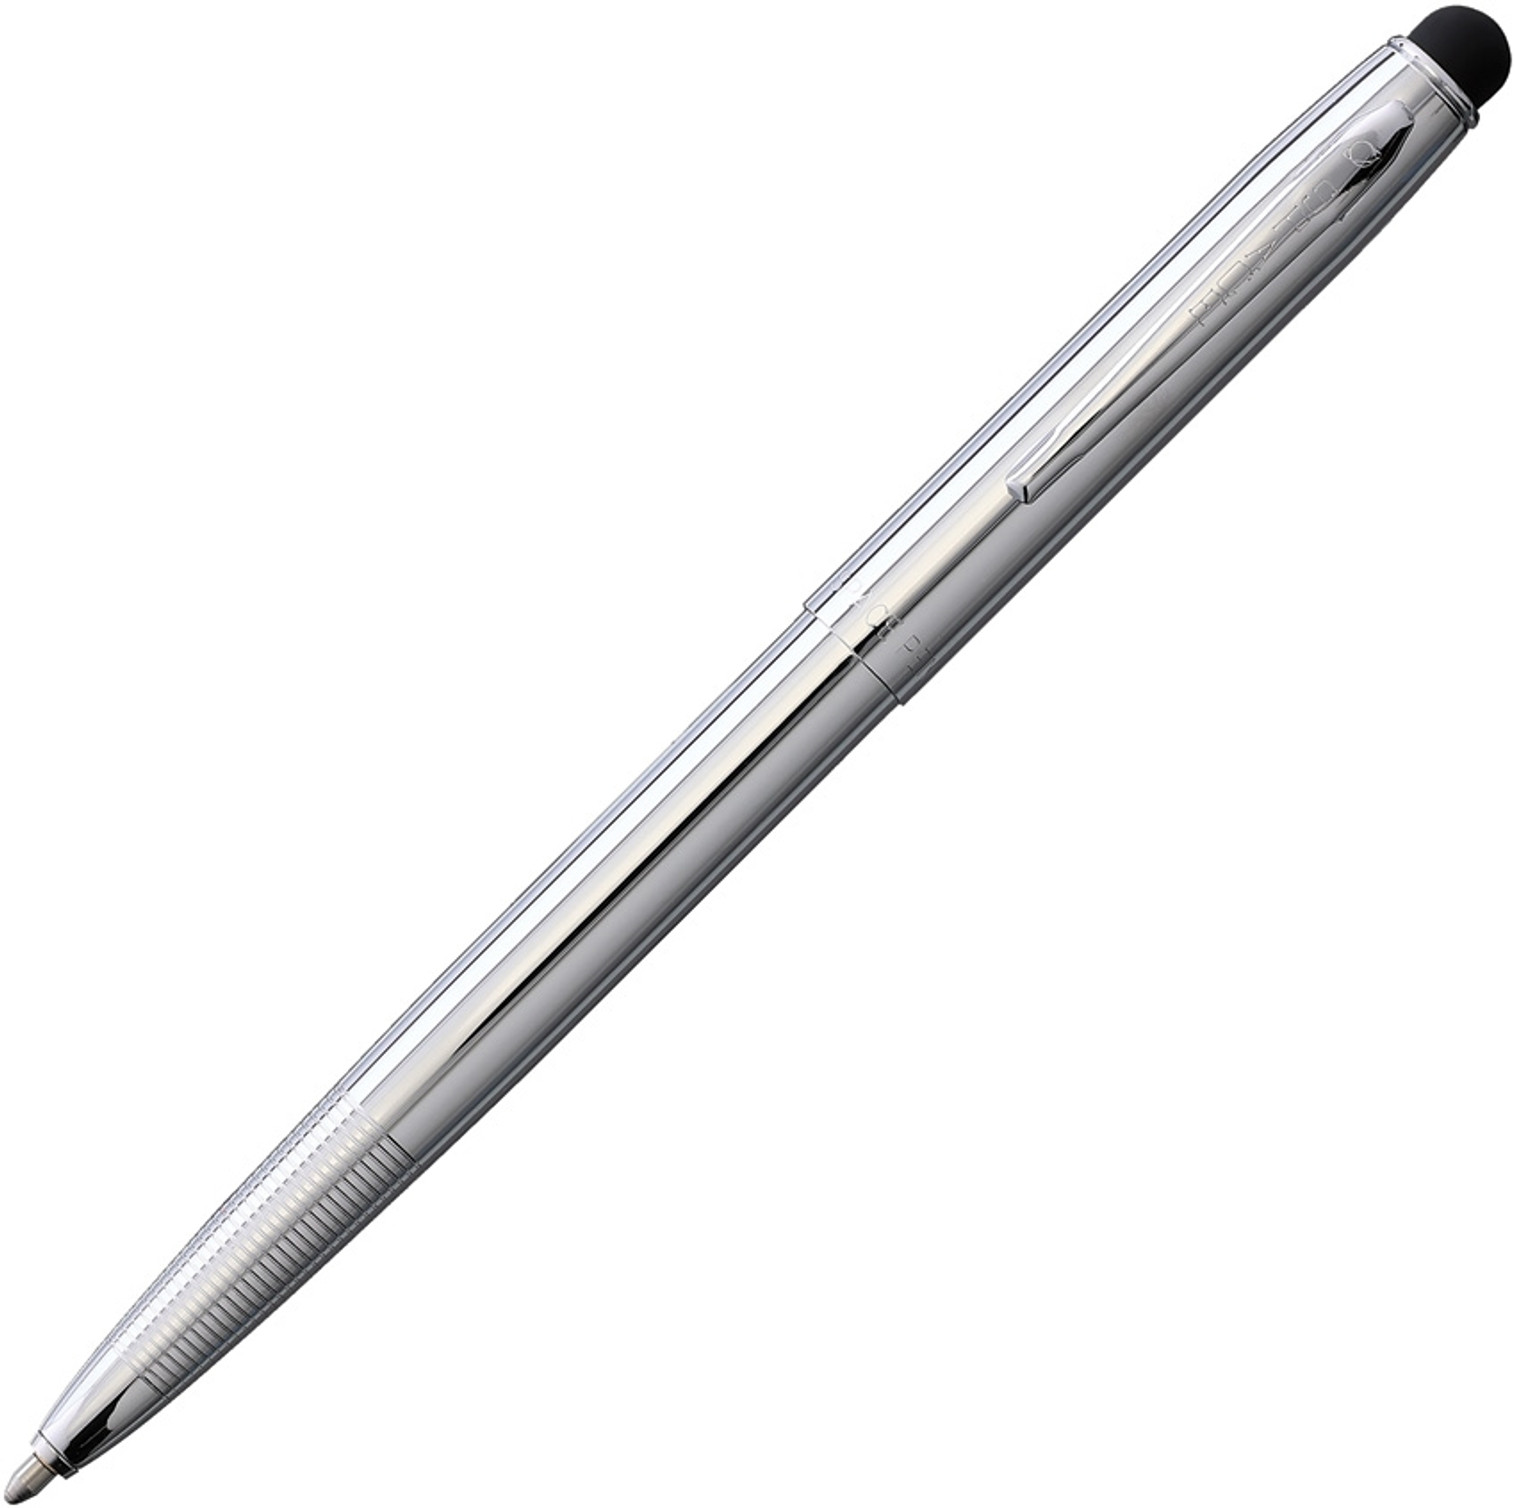 Cap-O-Matic and Stylus Pen